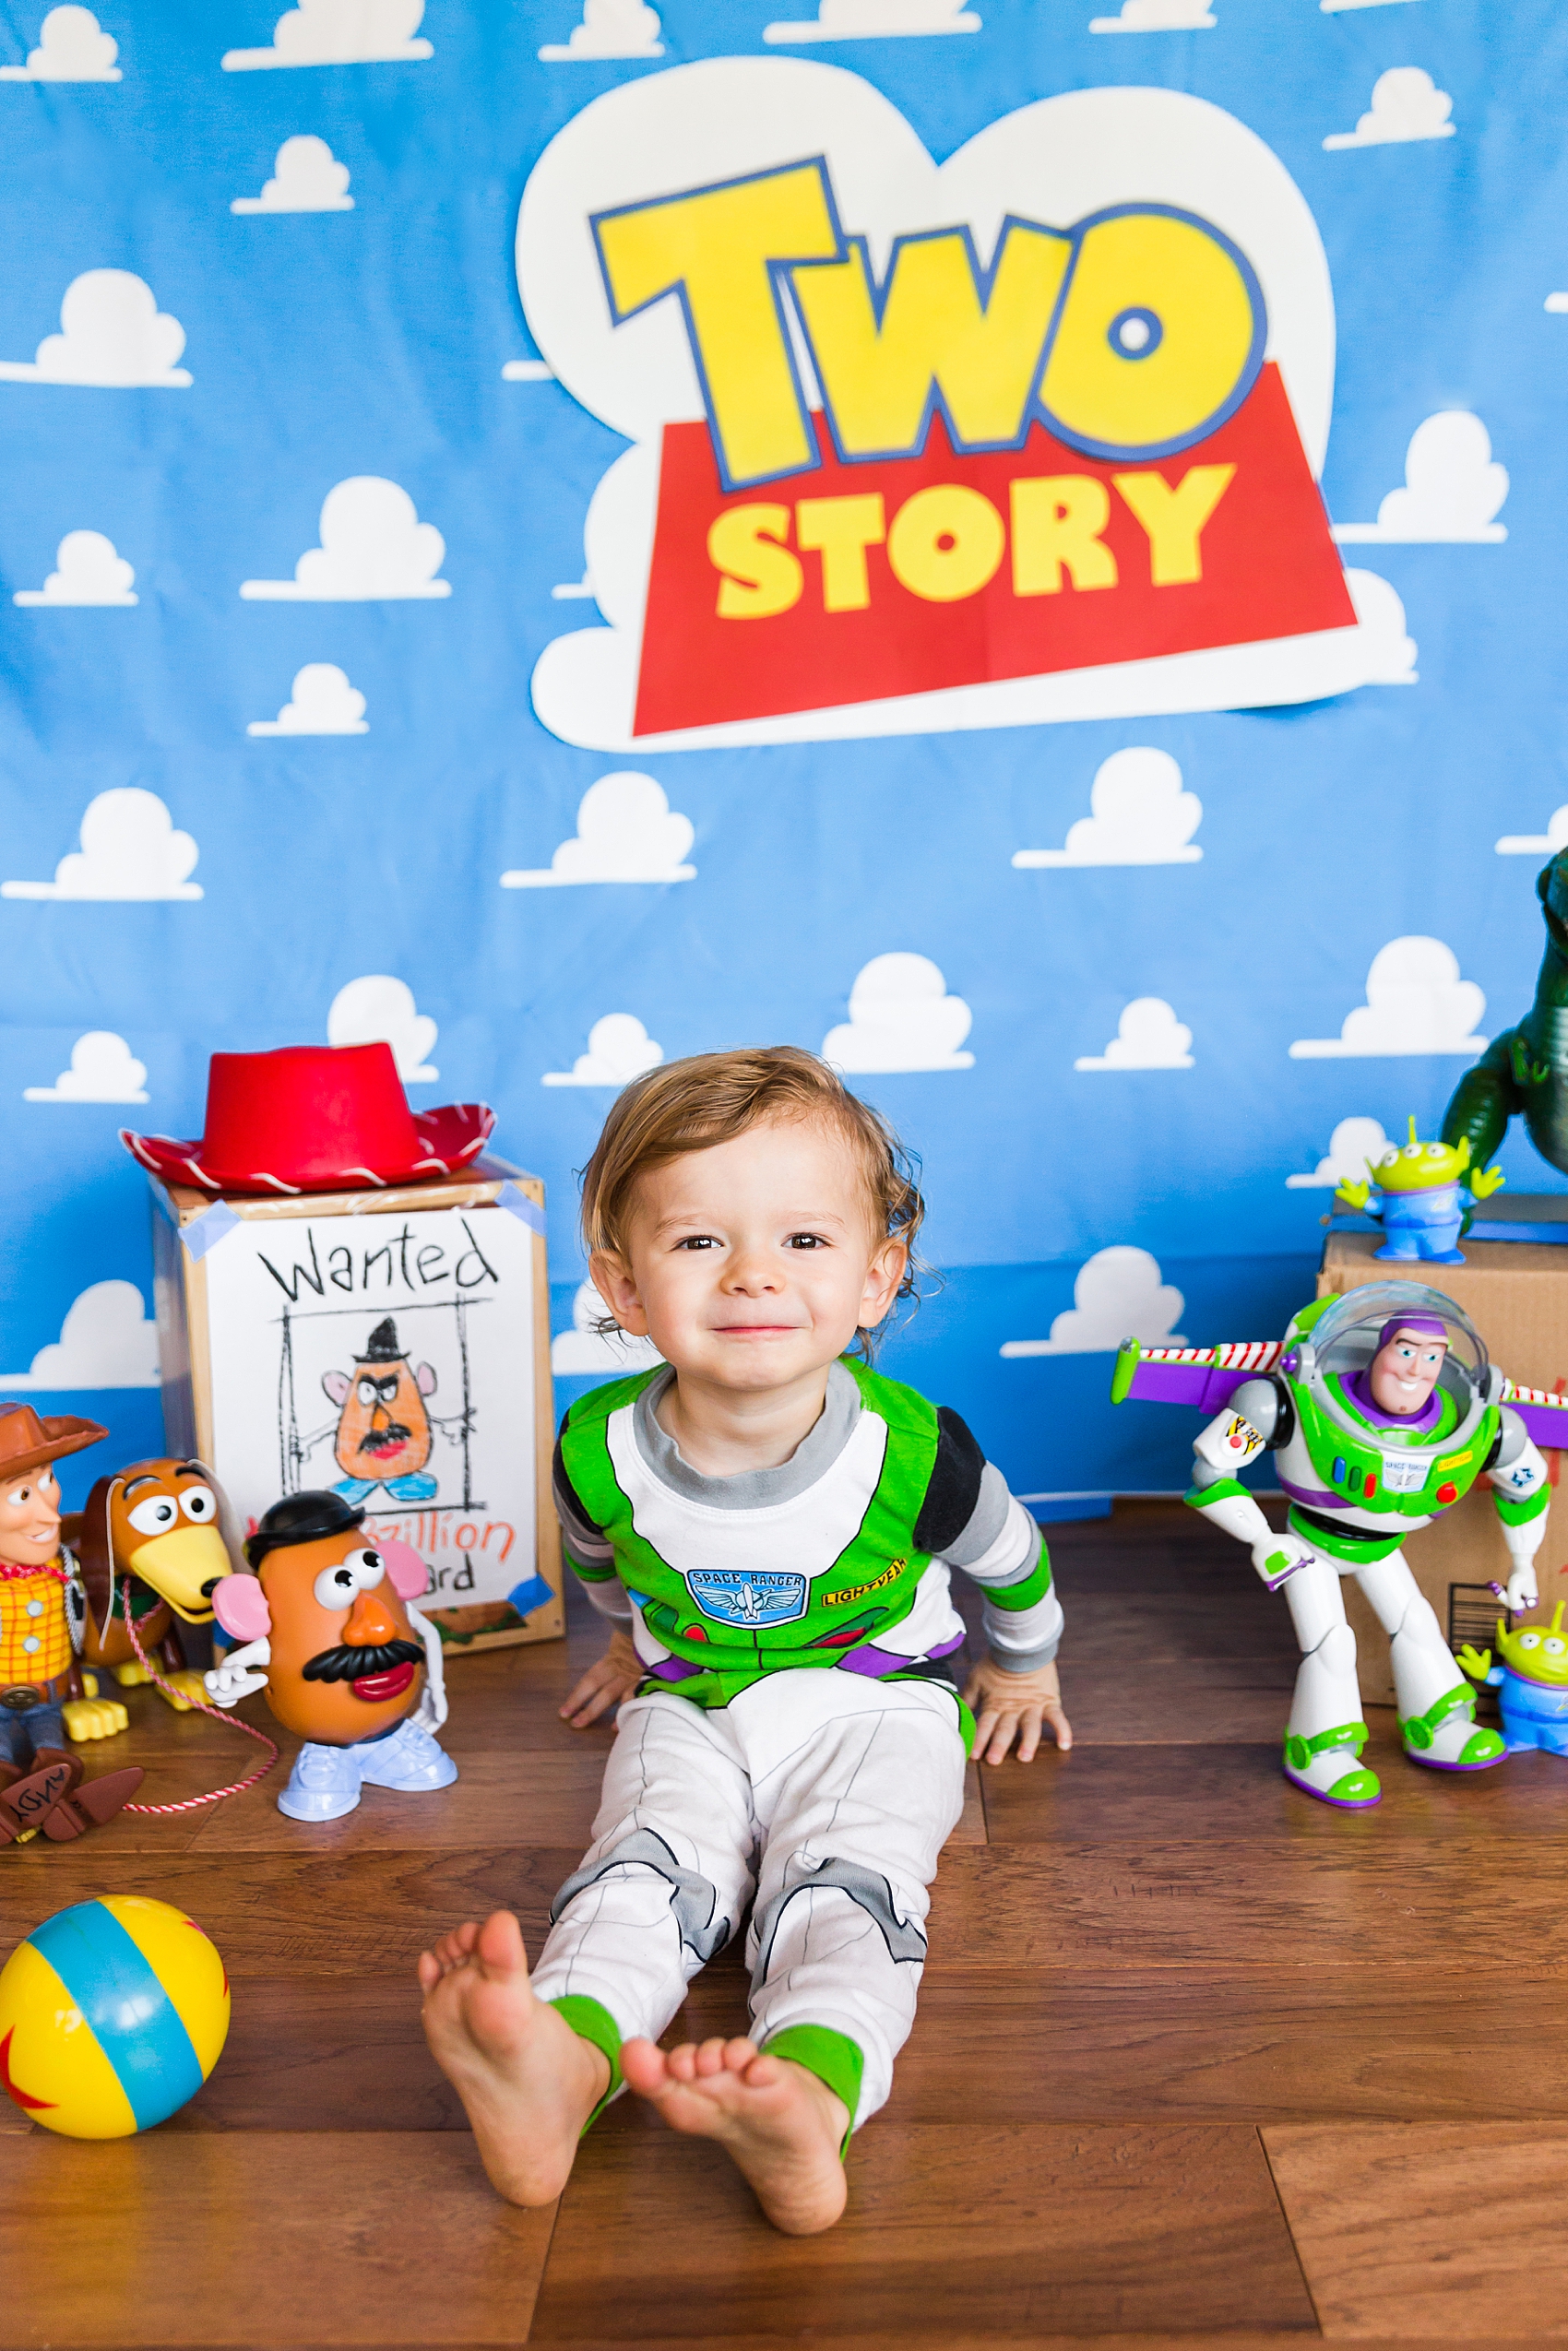 Leah Hope Photography | Scottsdale Phoenix Arizona | Indoor Studio Photography | 2nd Birthday Child Portraits | Two Story | Disney Birthday Theme | Toy Story Buzz Lightyear Woody | Disney Babies | Toddler Photos